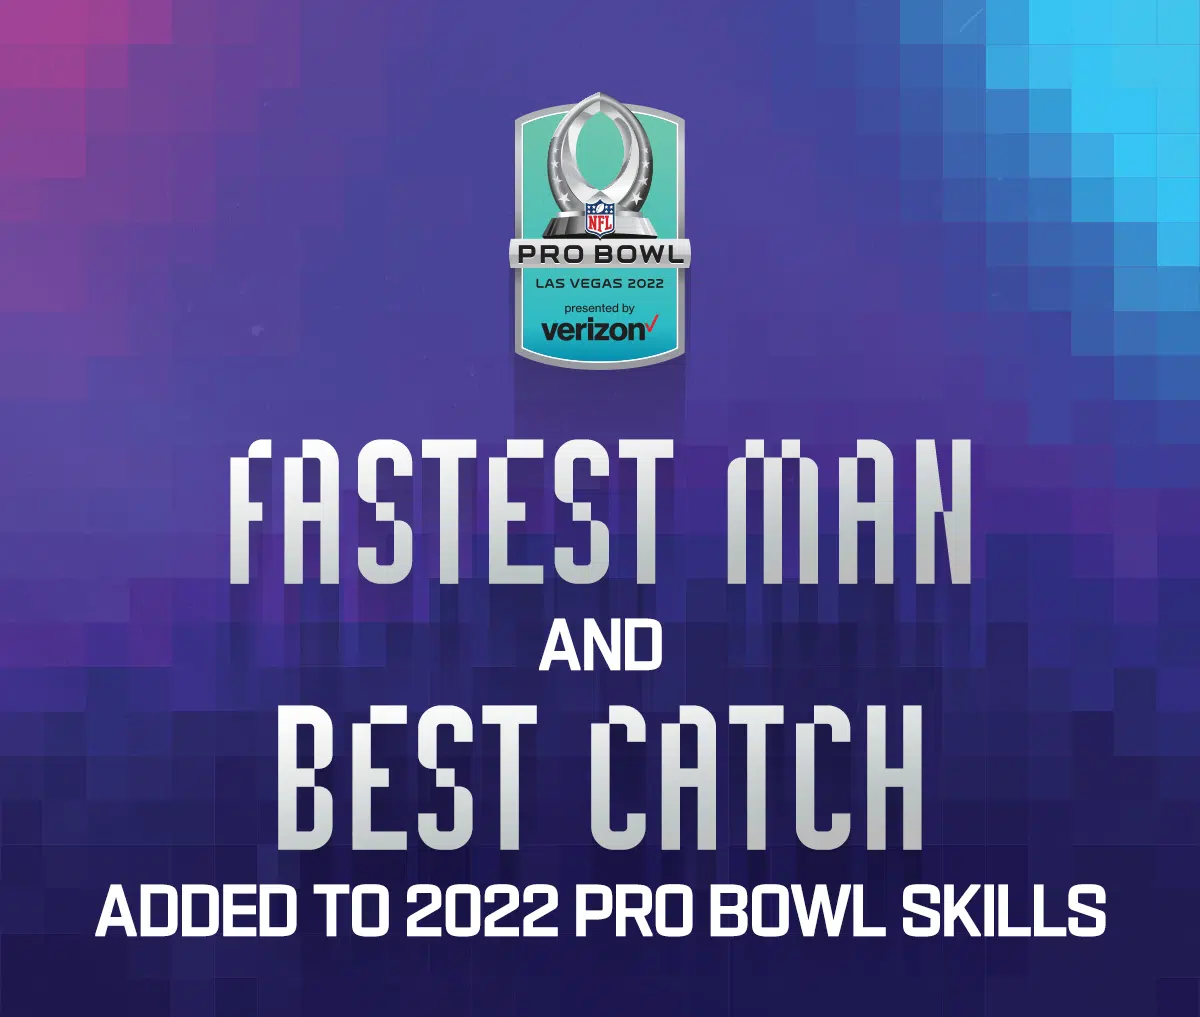 nfl pro bowl skills showdown 2022